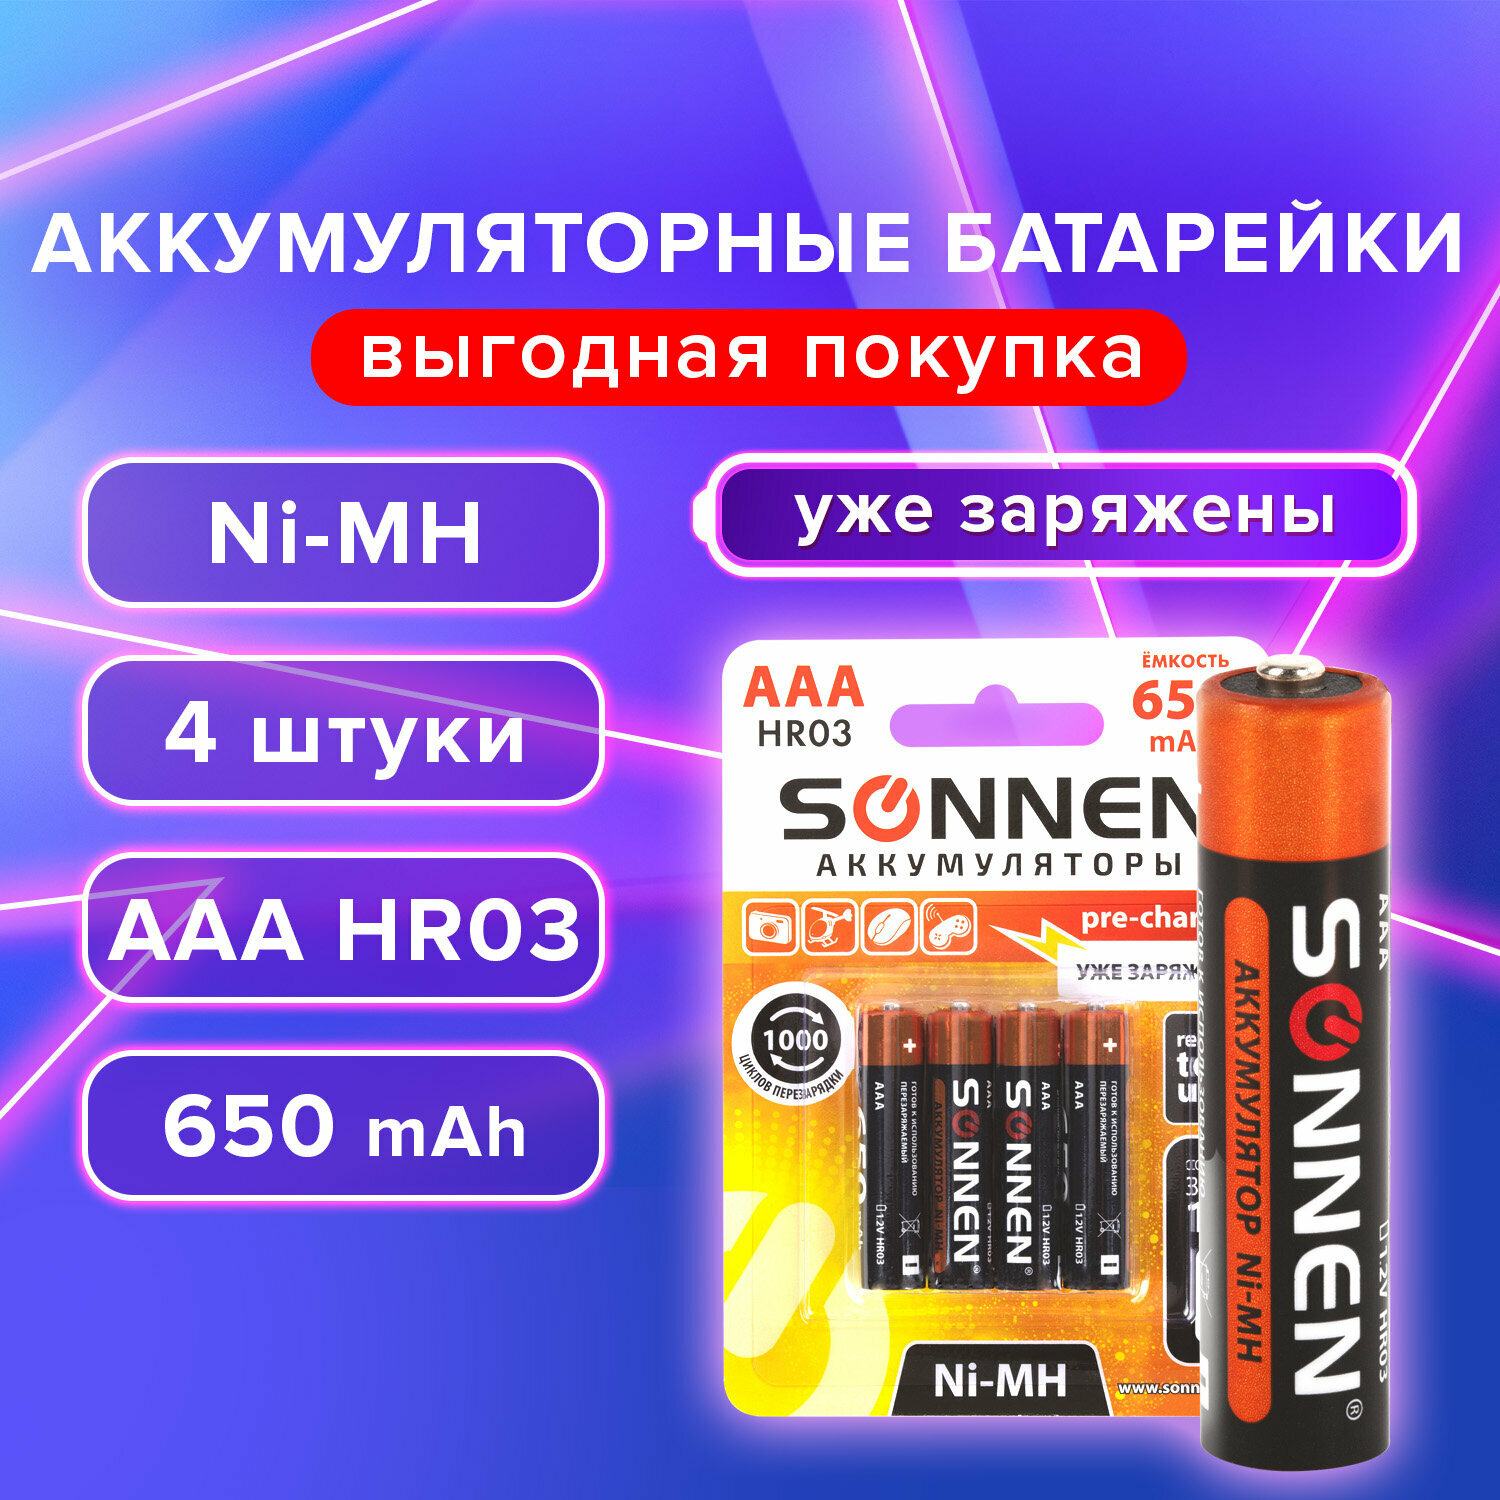 Батарейки аккумуляторные Ni-Mh мизинчиковые комплект 4 шт ААA (HR03) 650 mAh, SONNEN, 455609